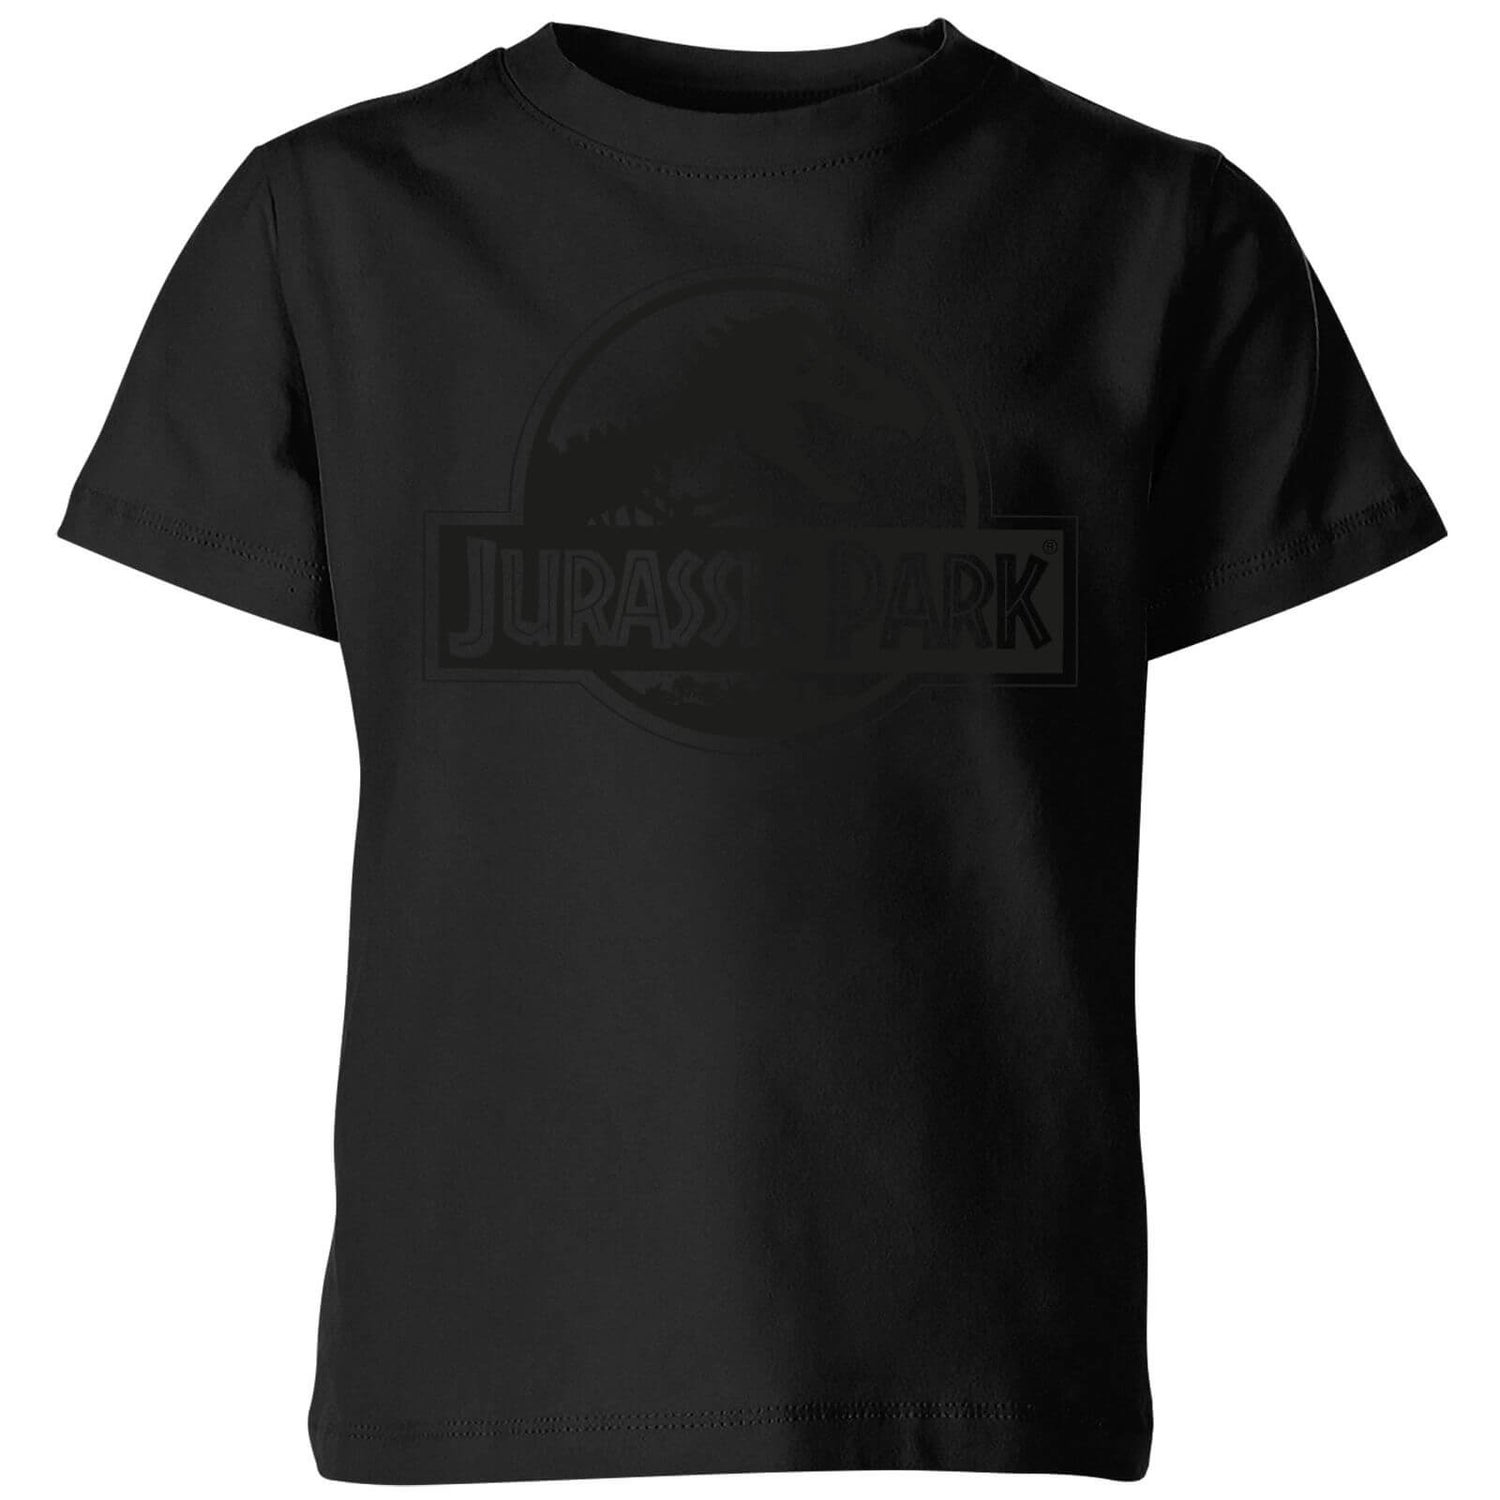 Jurassic Park Monochrome Kids' T-Shirt - Black